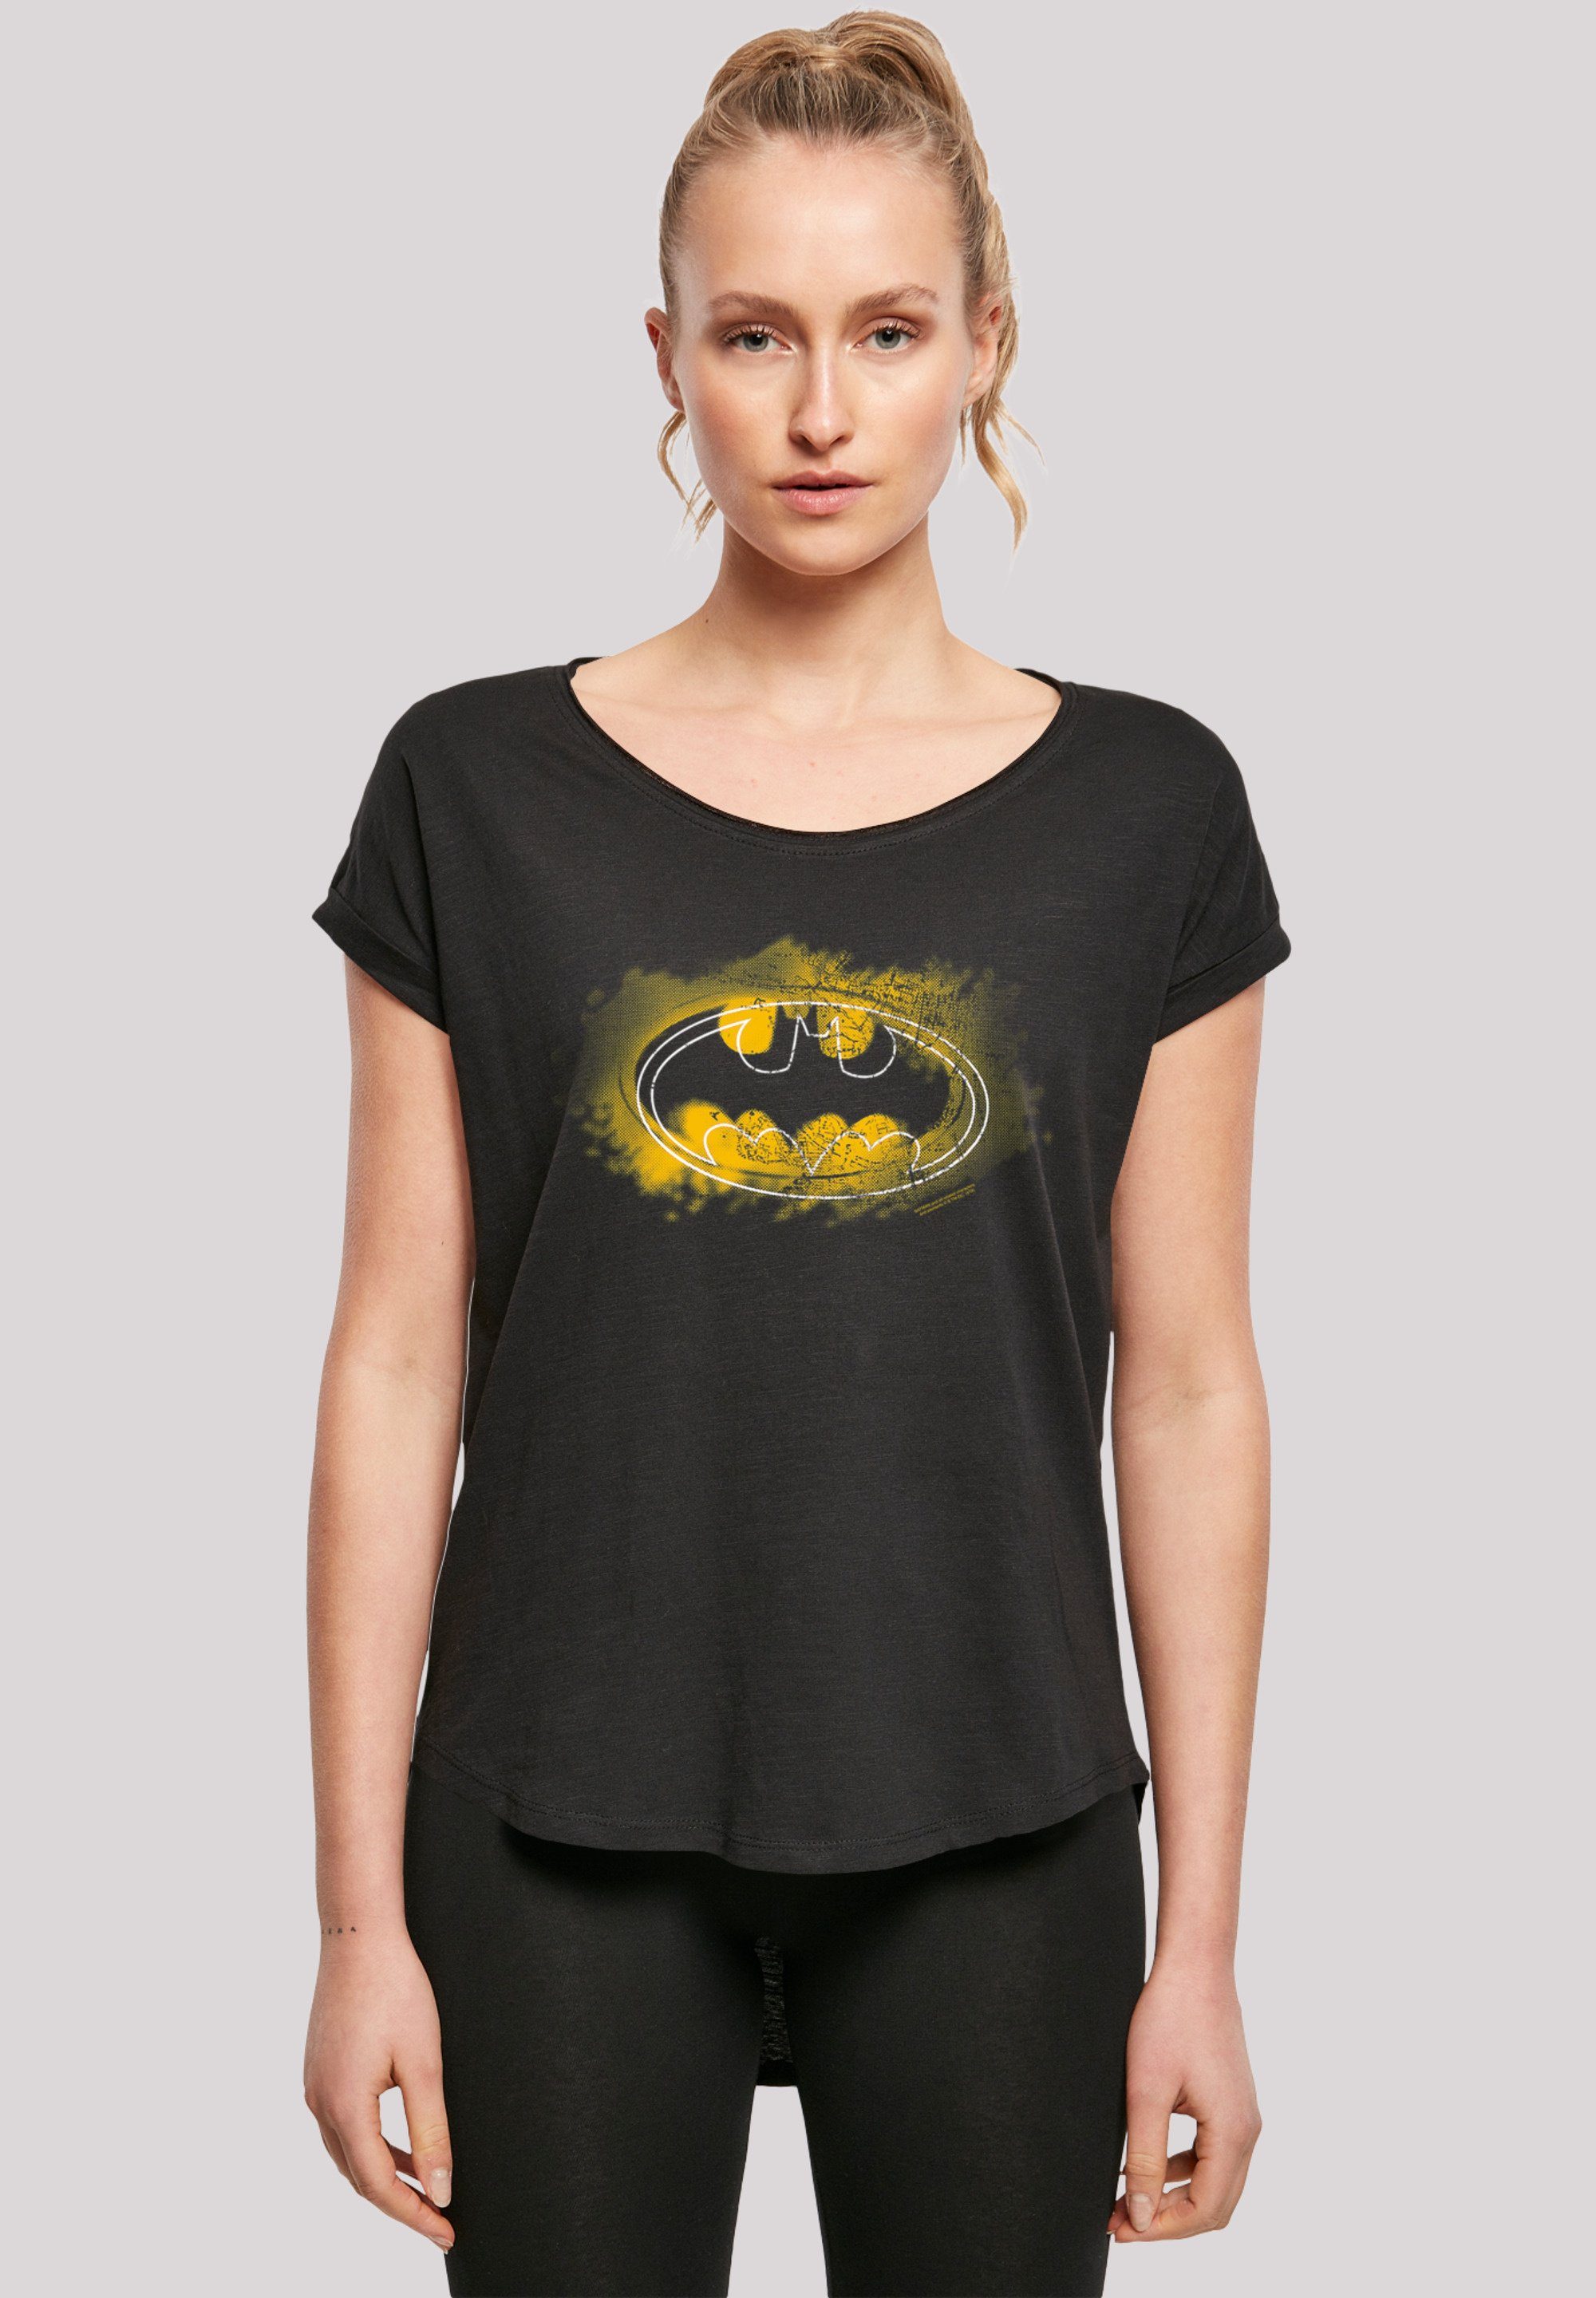 Batman F4NT4STIC Spray T-Shirt weicher Sehr Logo Baumwollstoff Comics Print, hohem Tragekomfort DC mit